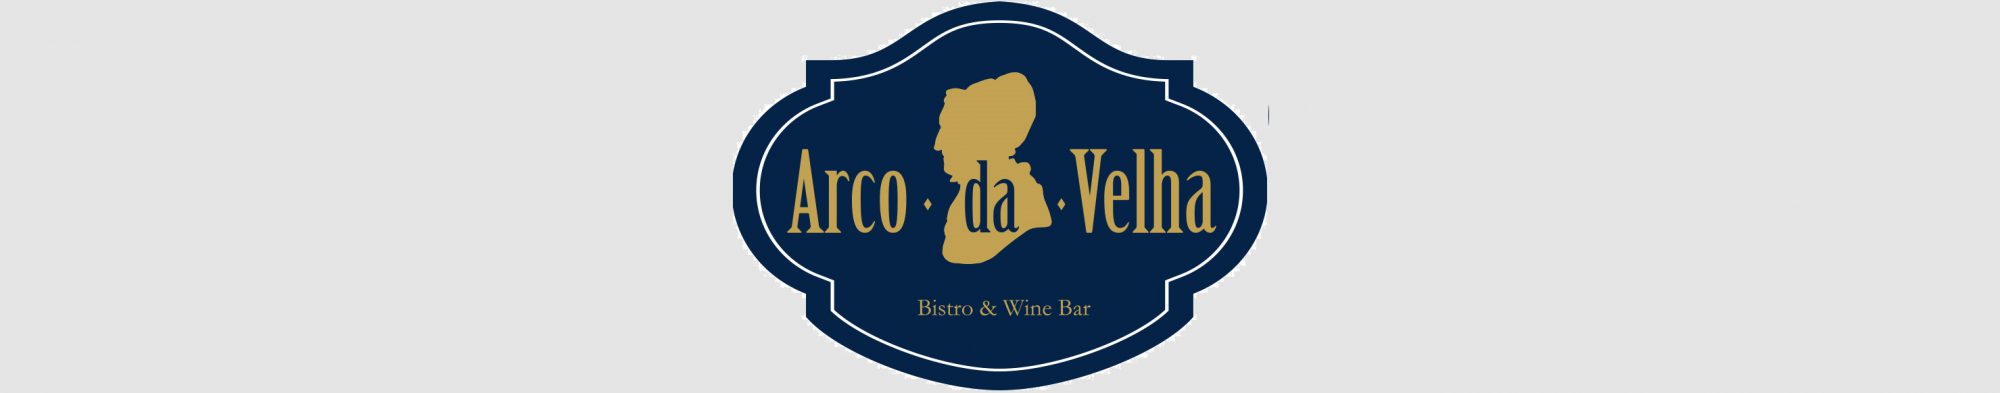 Arco-da-Velha Bistro & Wine Bar | Porto